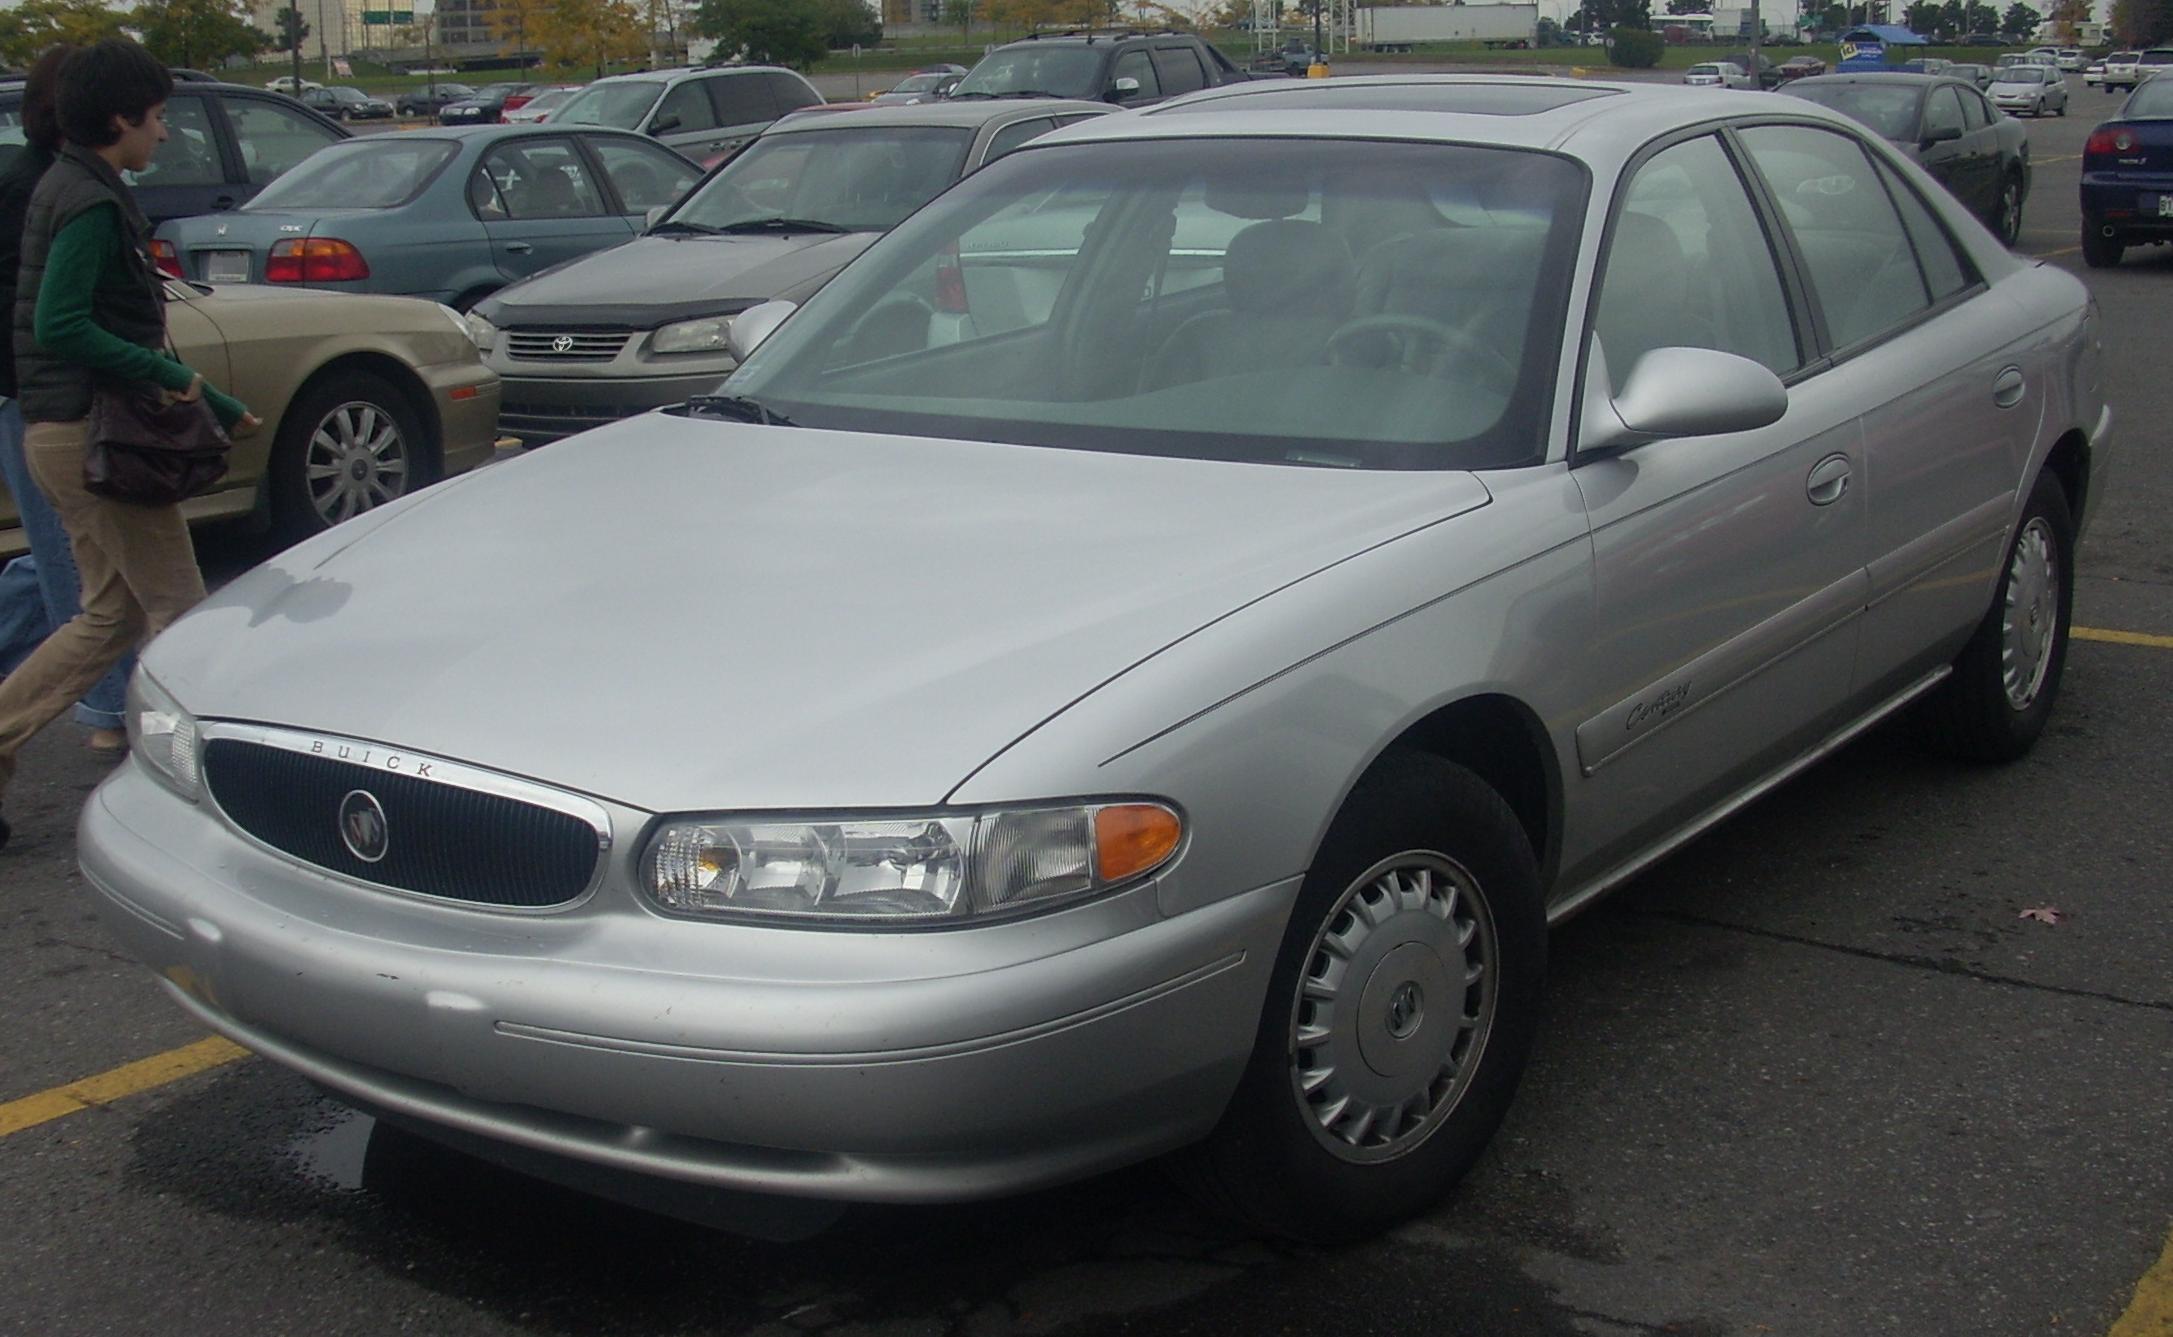 File:1997-2002 Buick Century.JPG - Wikimedia Commons